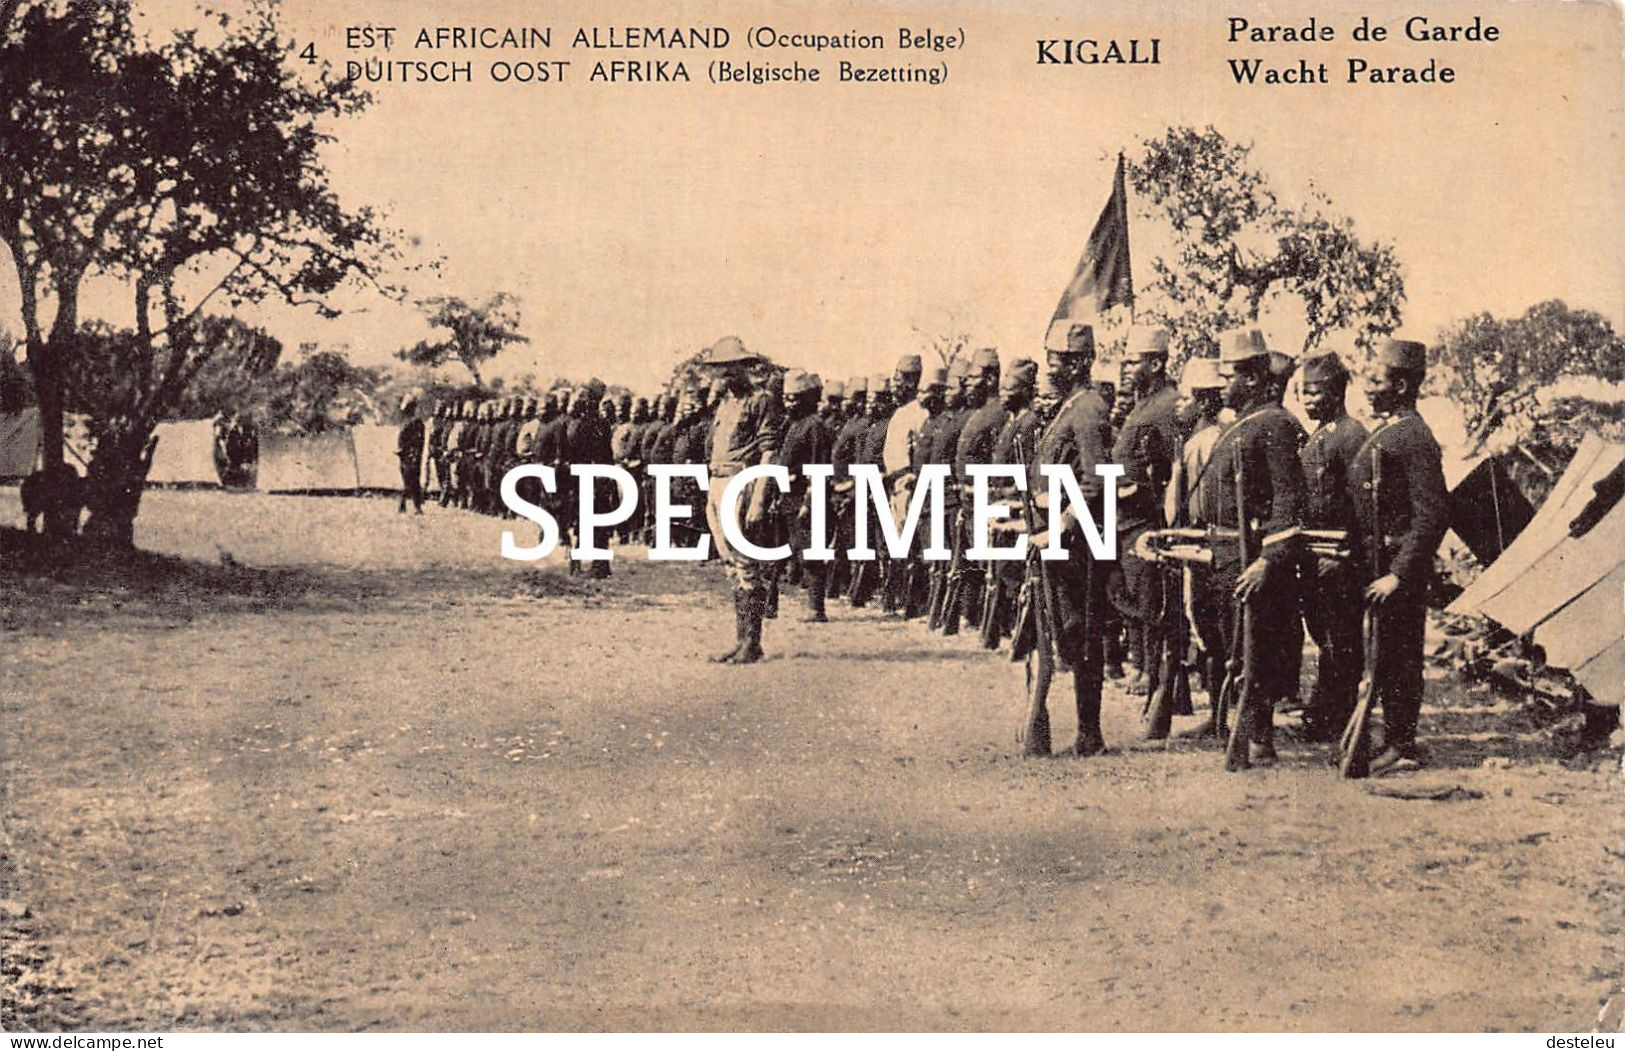 Est Africain Allemand -  Parade De Garde  Kigali Ruanda - 10 Centimes Stamp - Ruanda Urundi